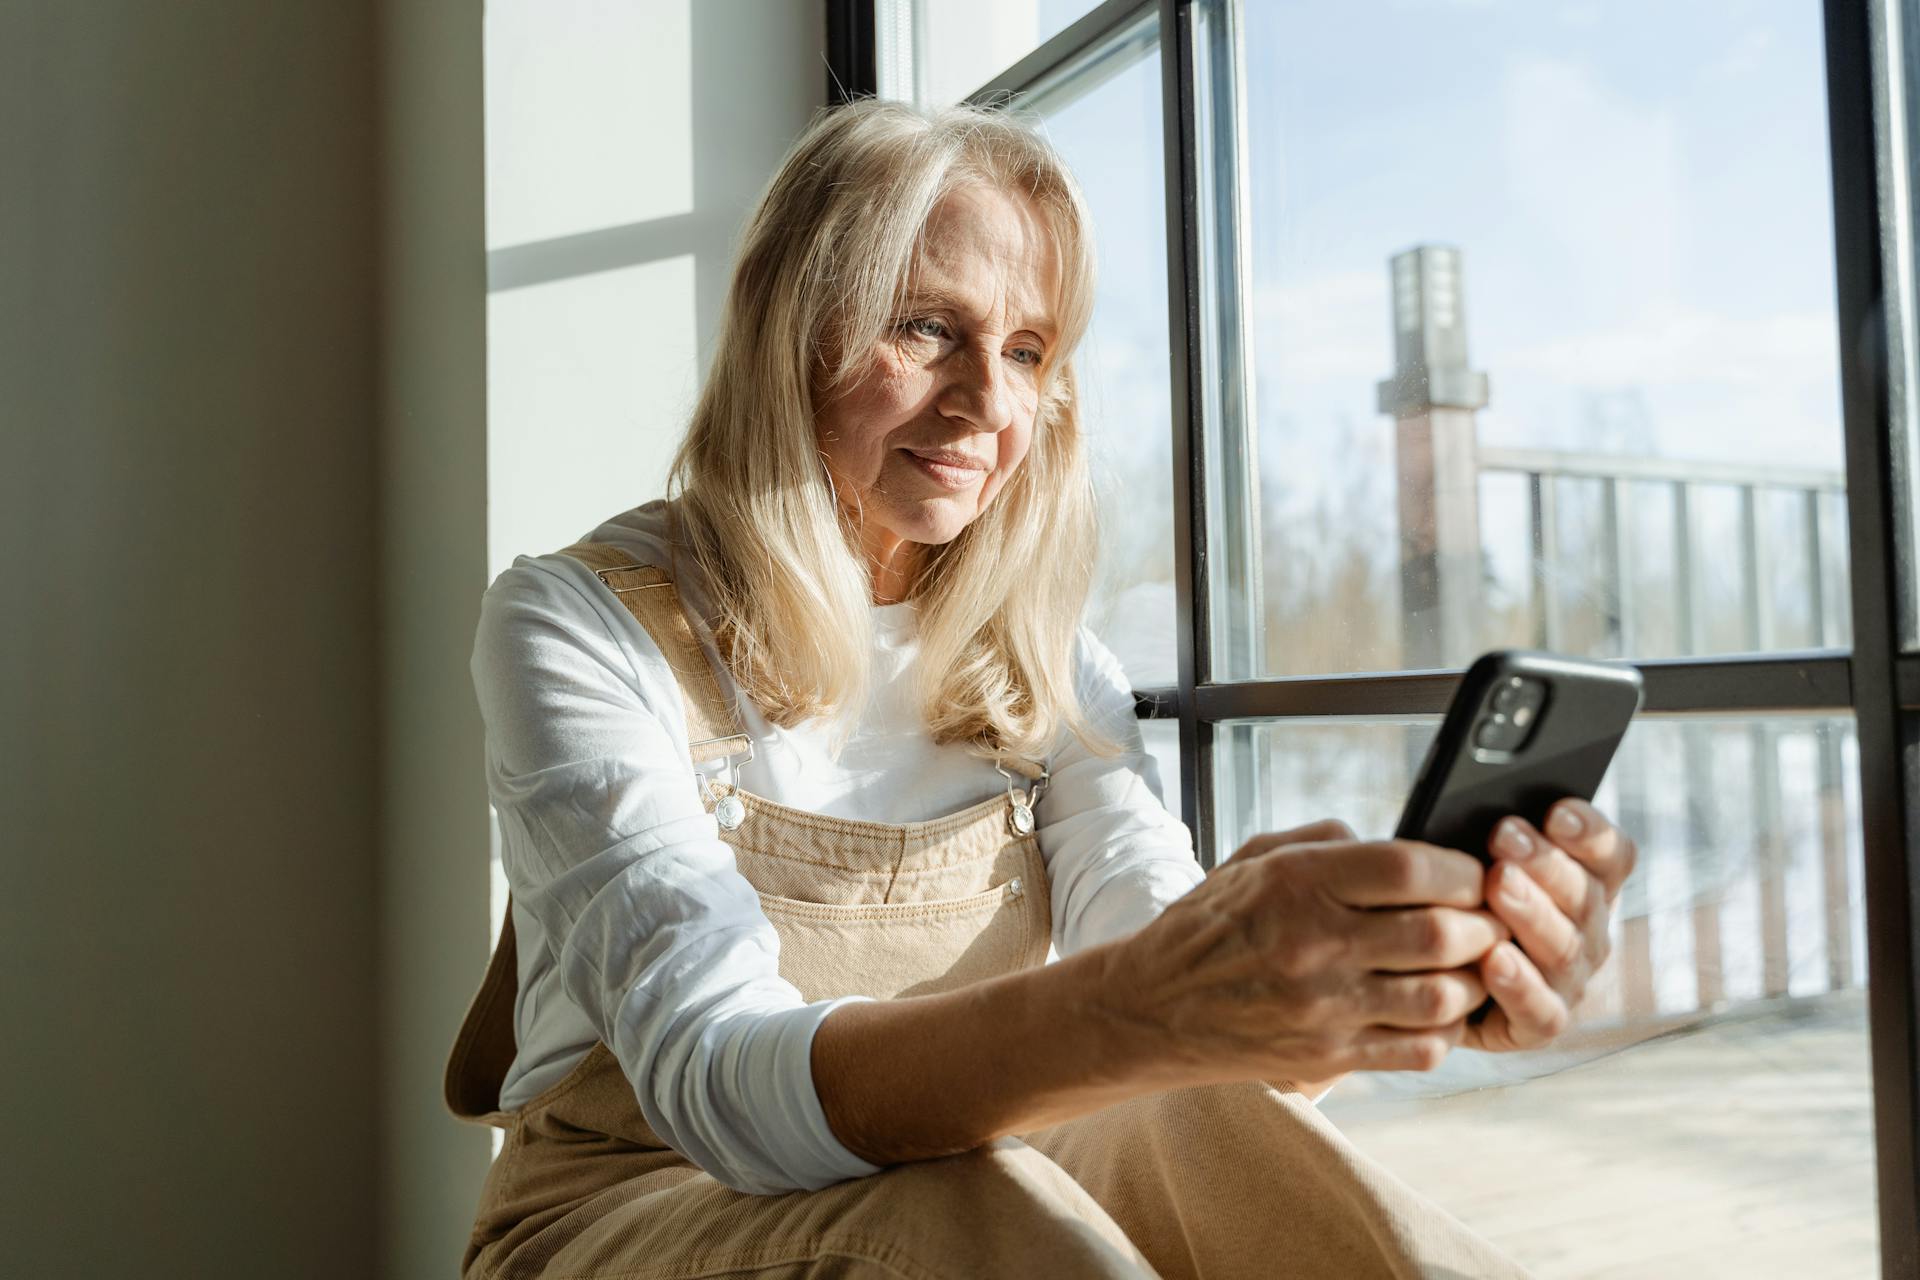 Elderly woman using a phone | Source: Pexels